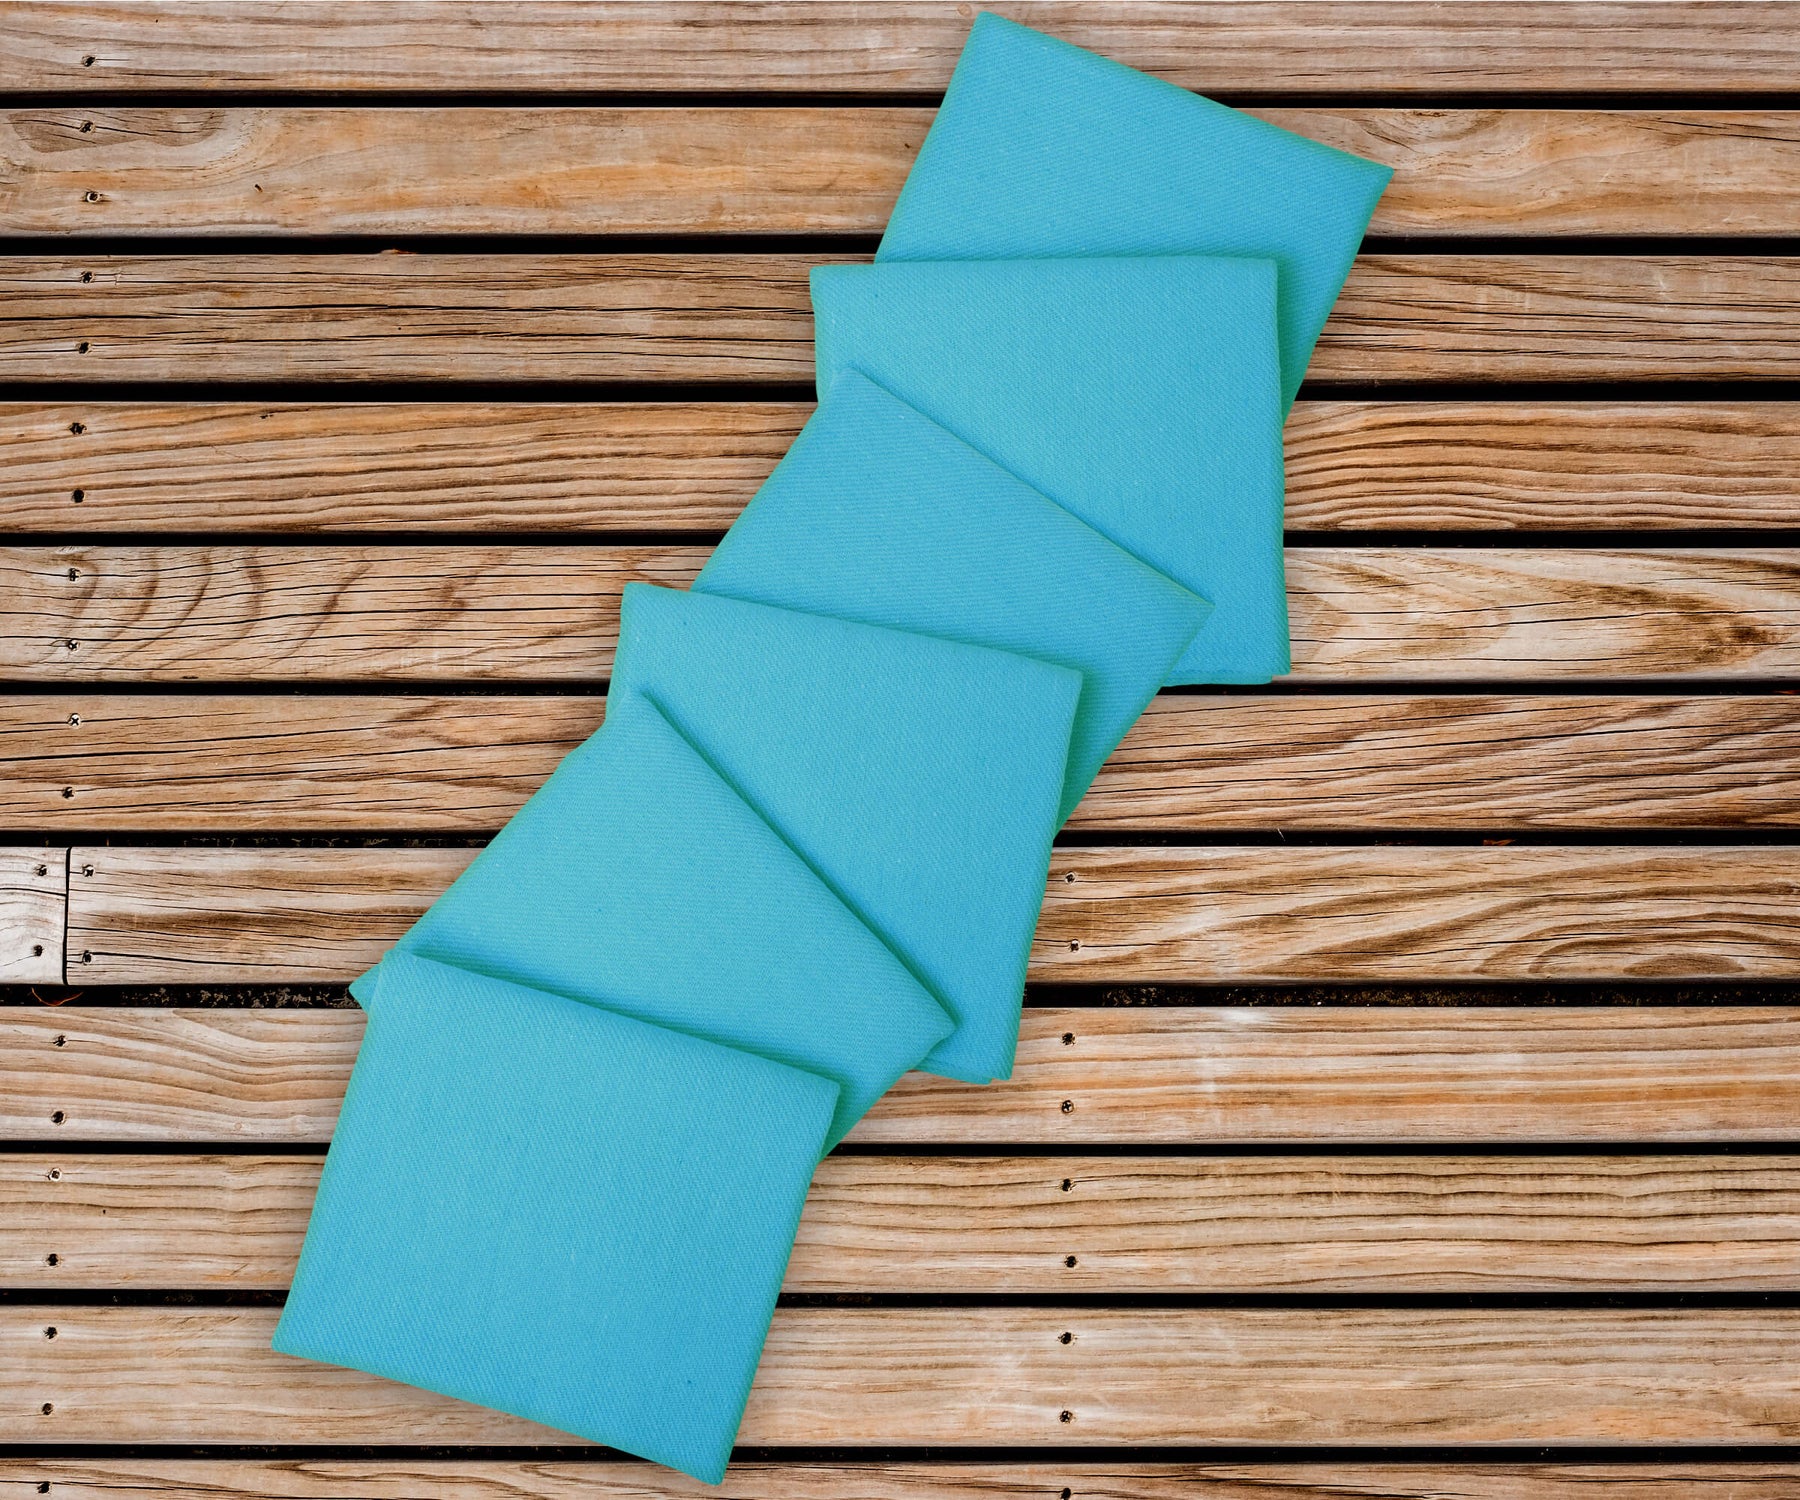 Napkins cloth washable napkins with 1" borders are arranged alternately on the wood